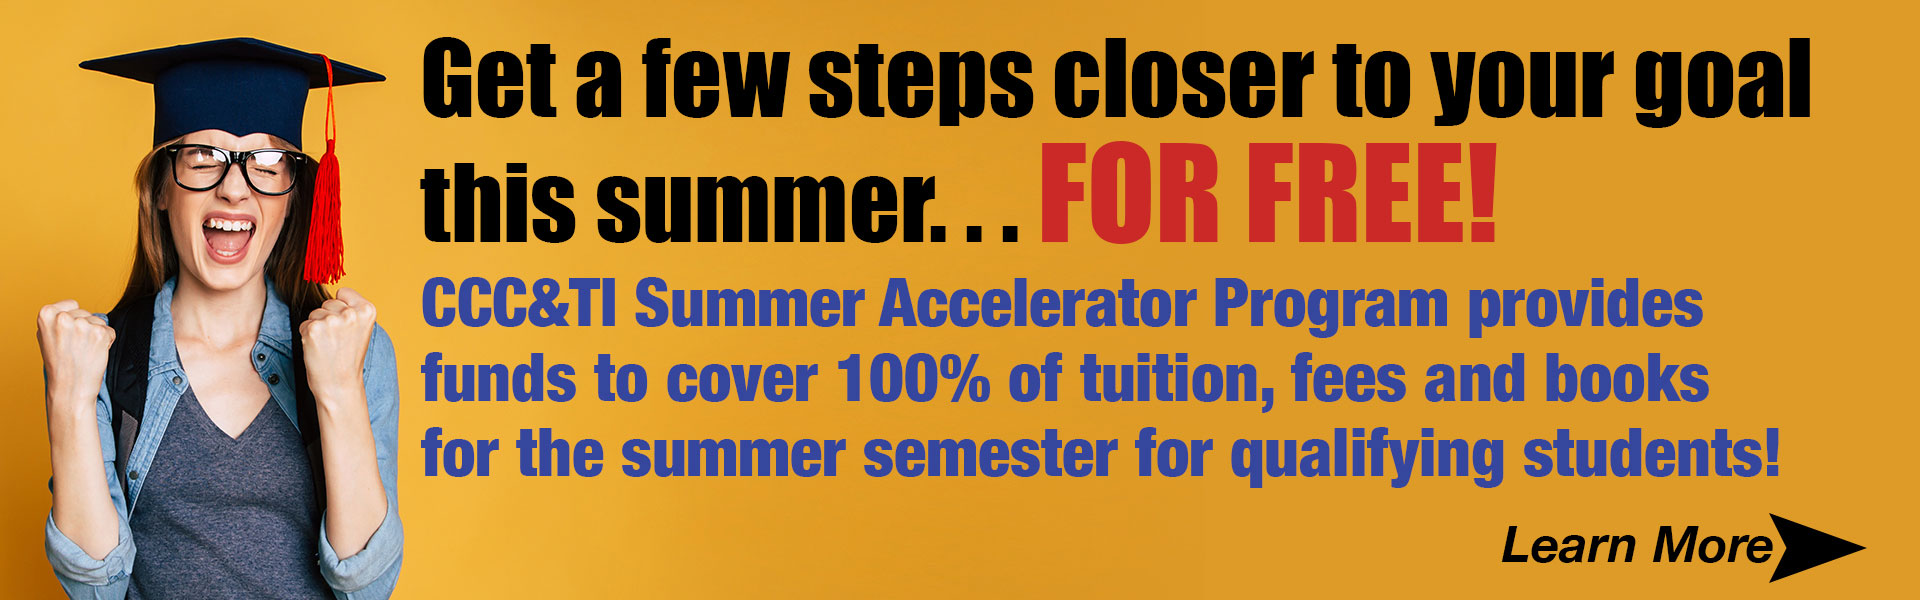 Summer Accelerator Grant Program